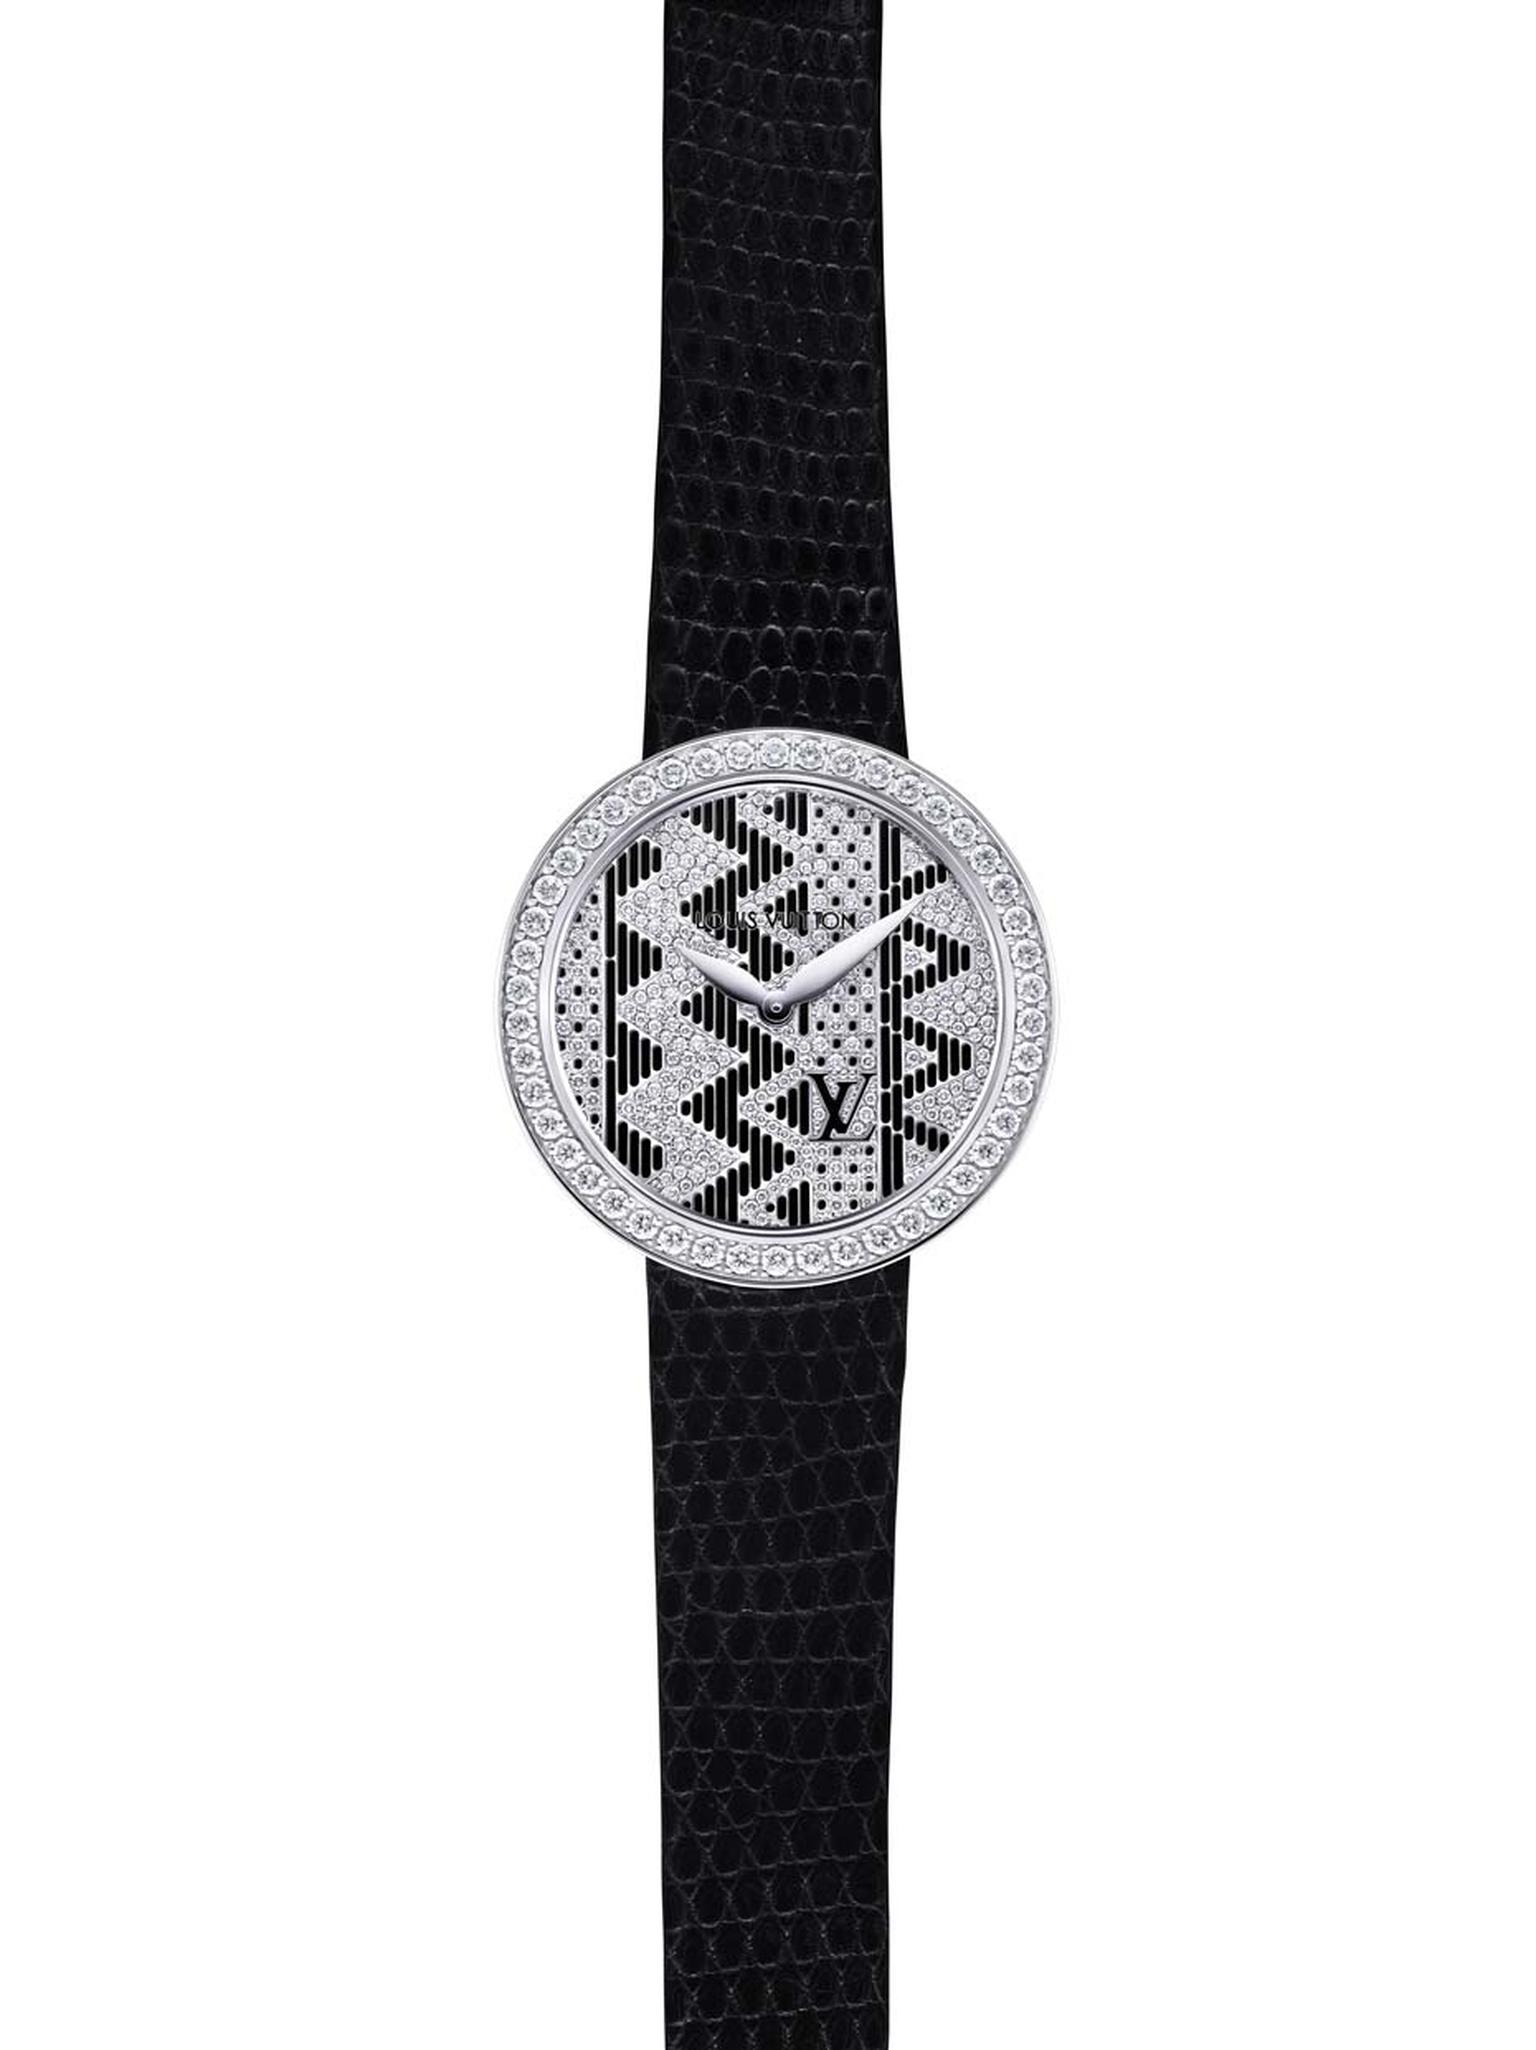 Louis Vuitton watches_Joaillerie Chevron Noire.jpg